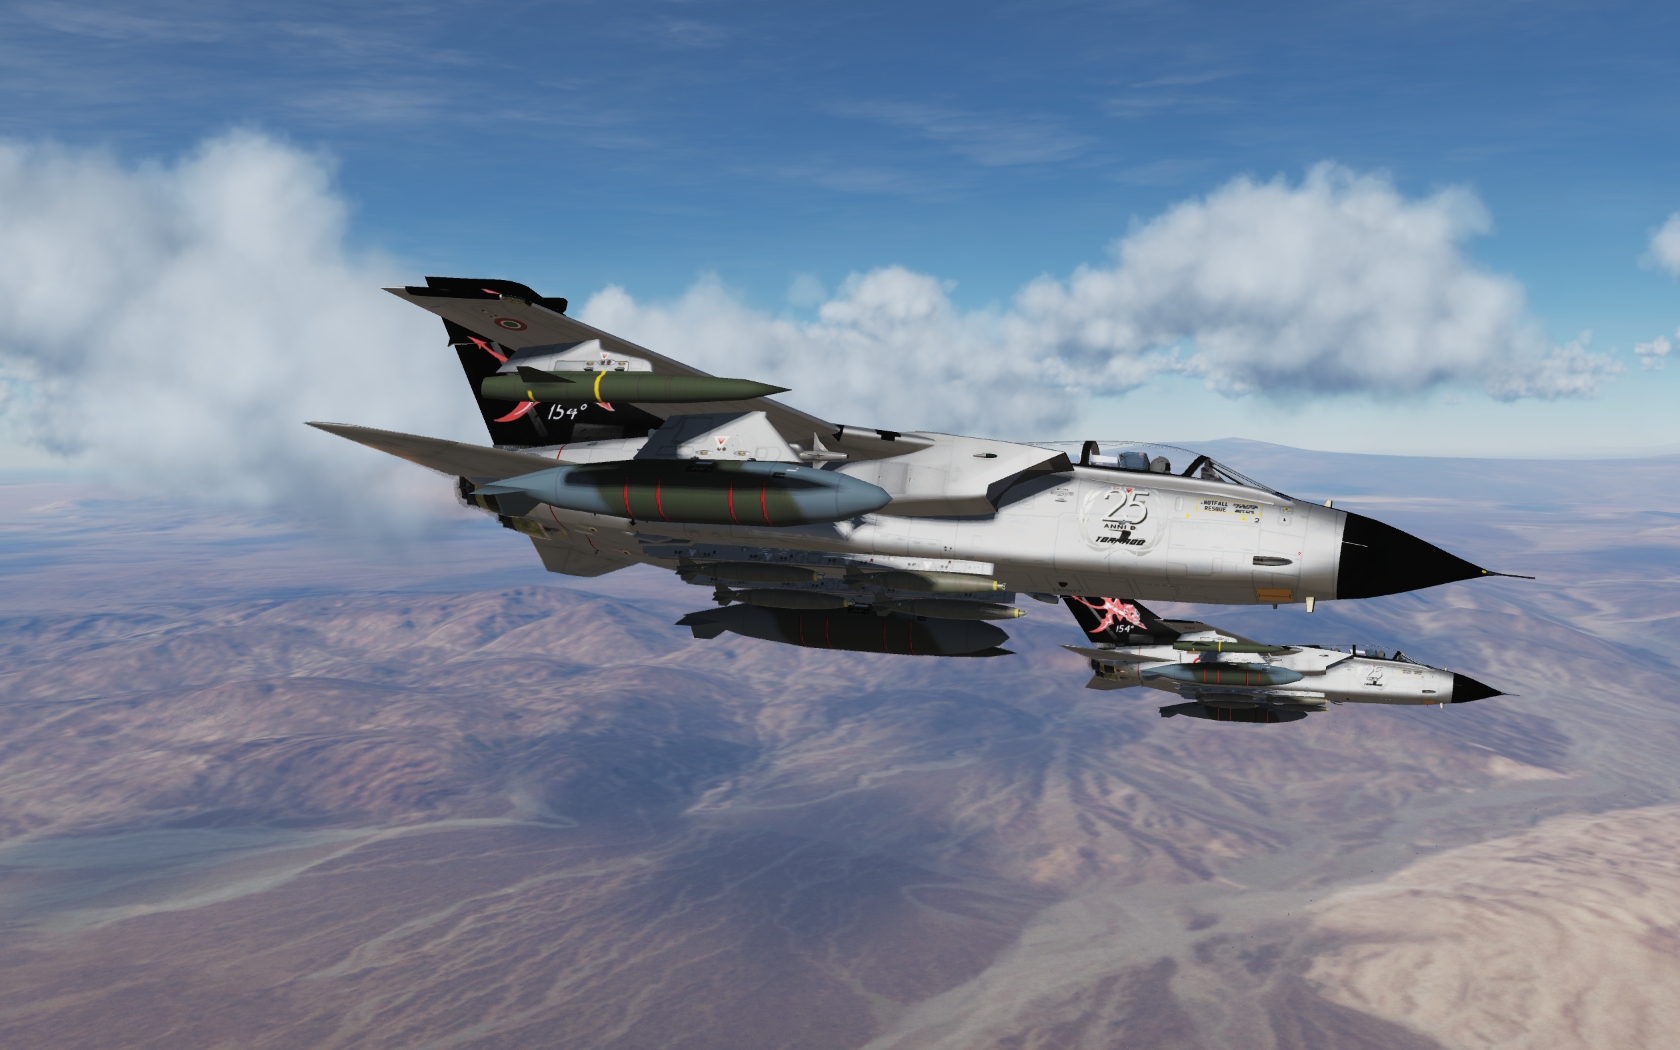 DCS WORLD 米格21比斯 + 米格29 + Tornado + A-10  混战游戏截图-3235 